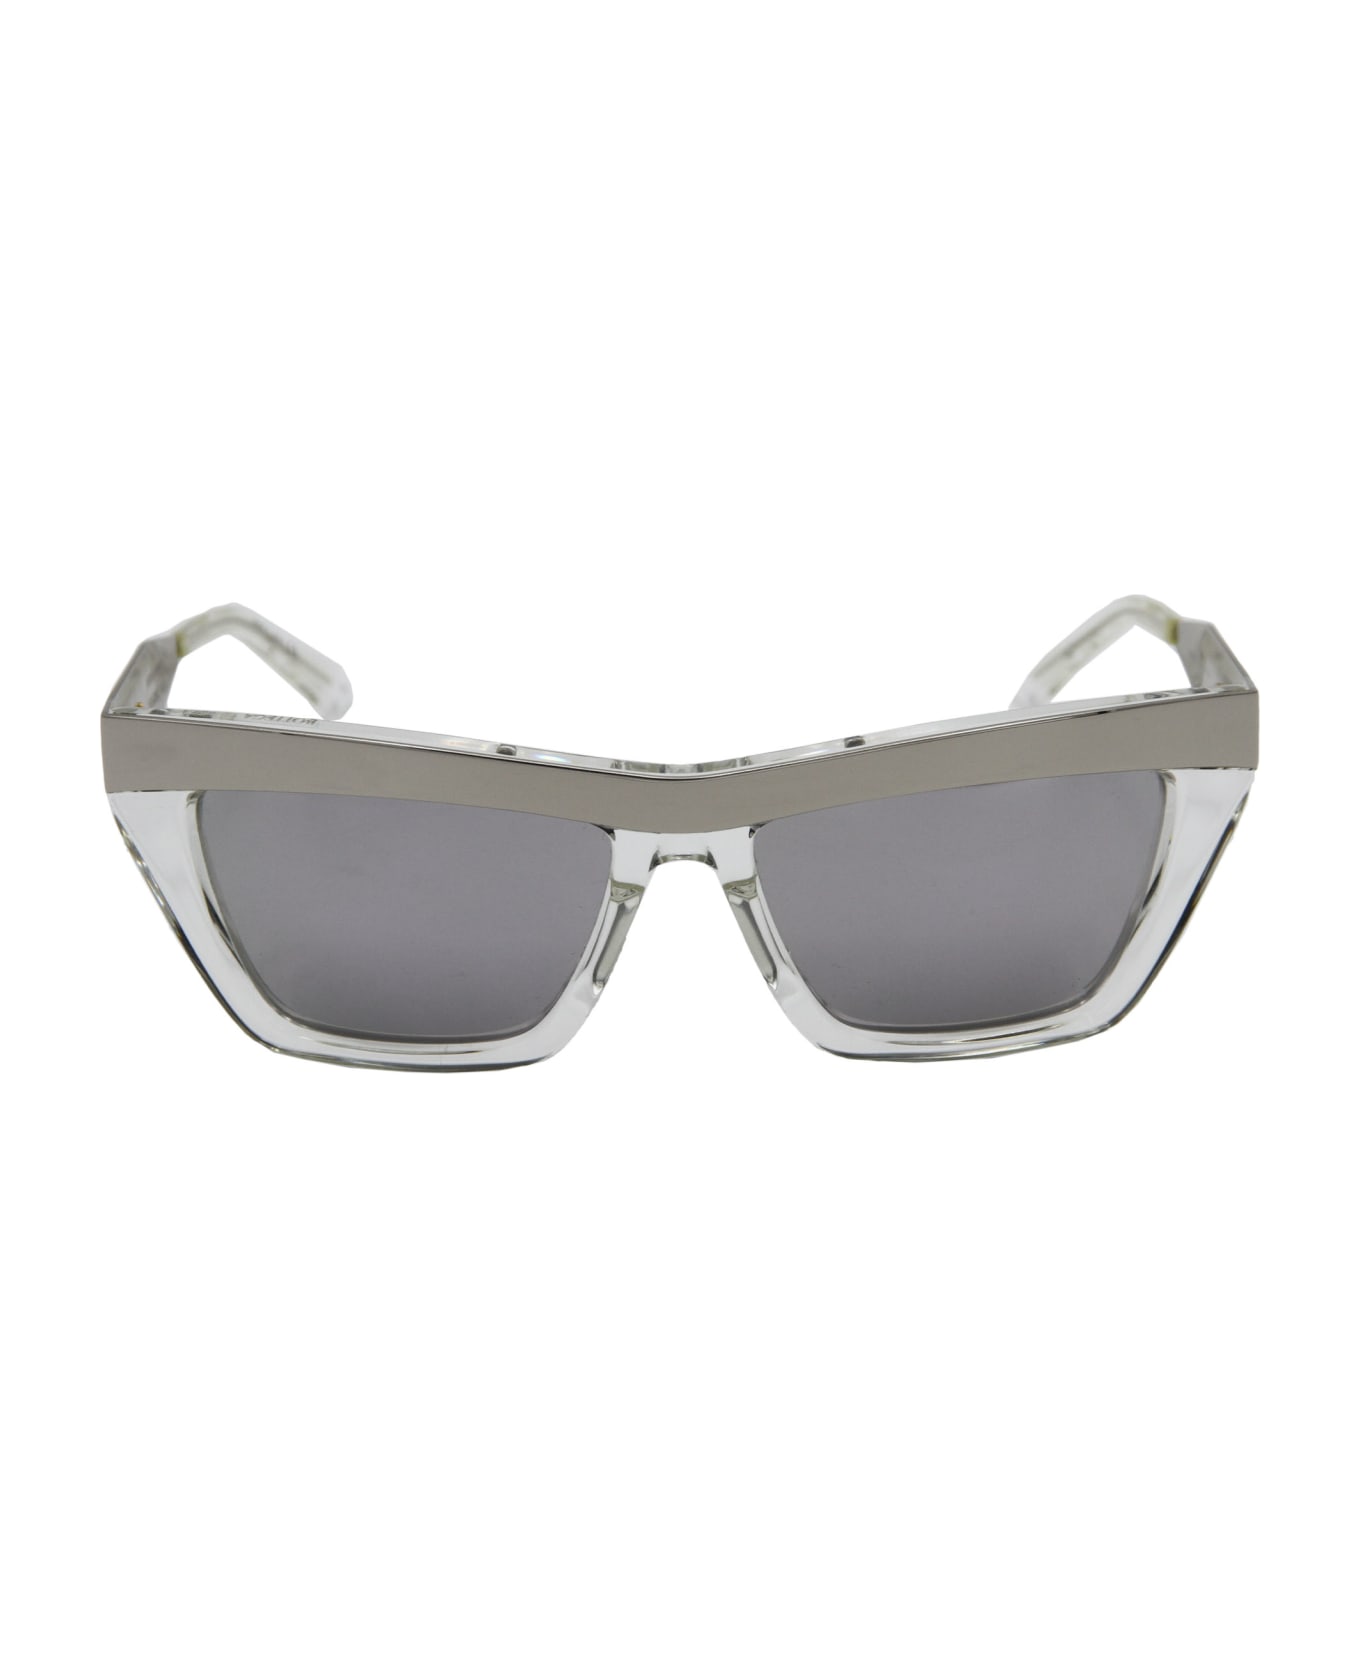 Bottega Veneta Eyewear Squared Sunglasses - grey